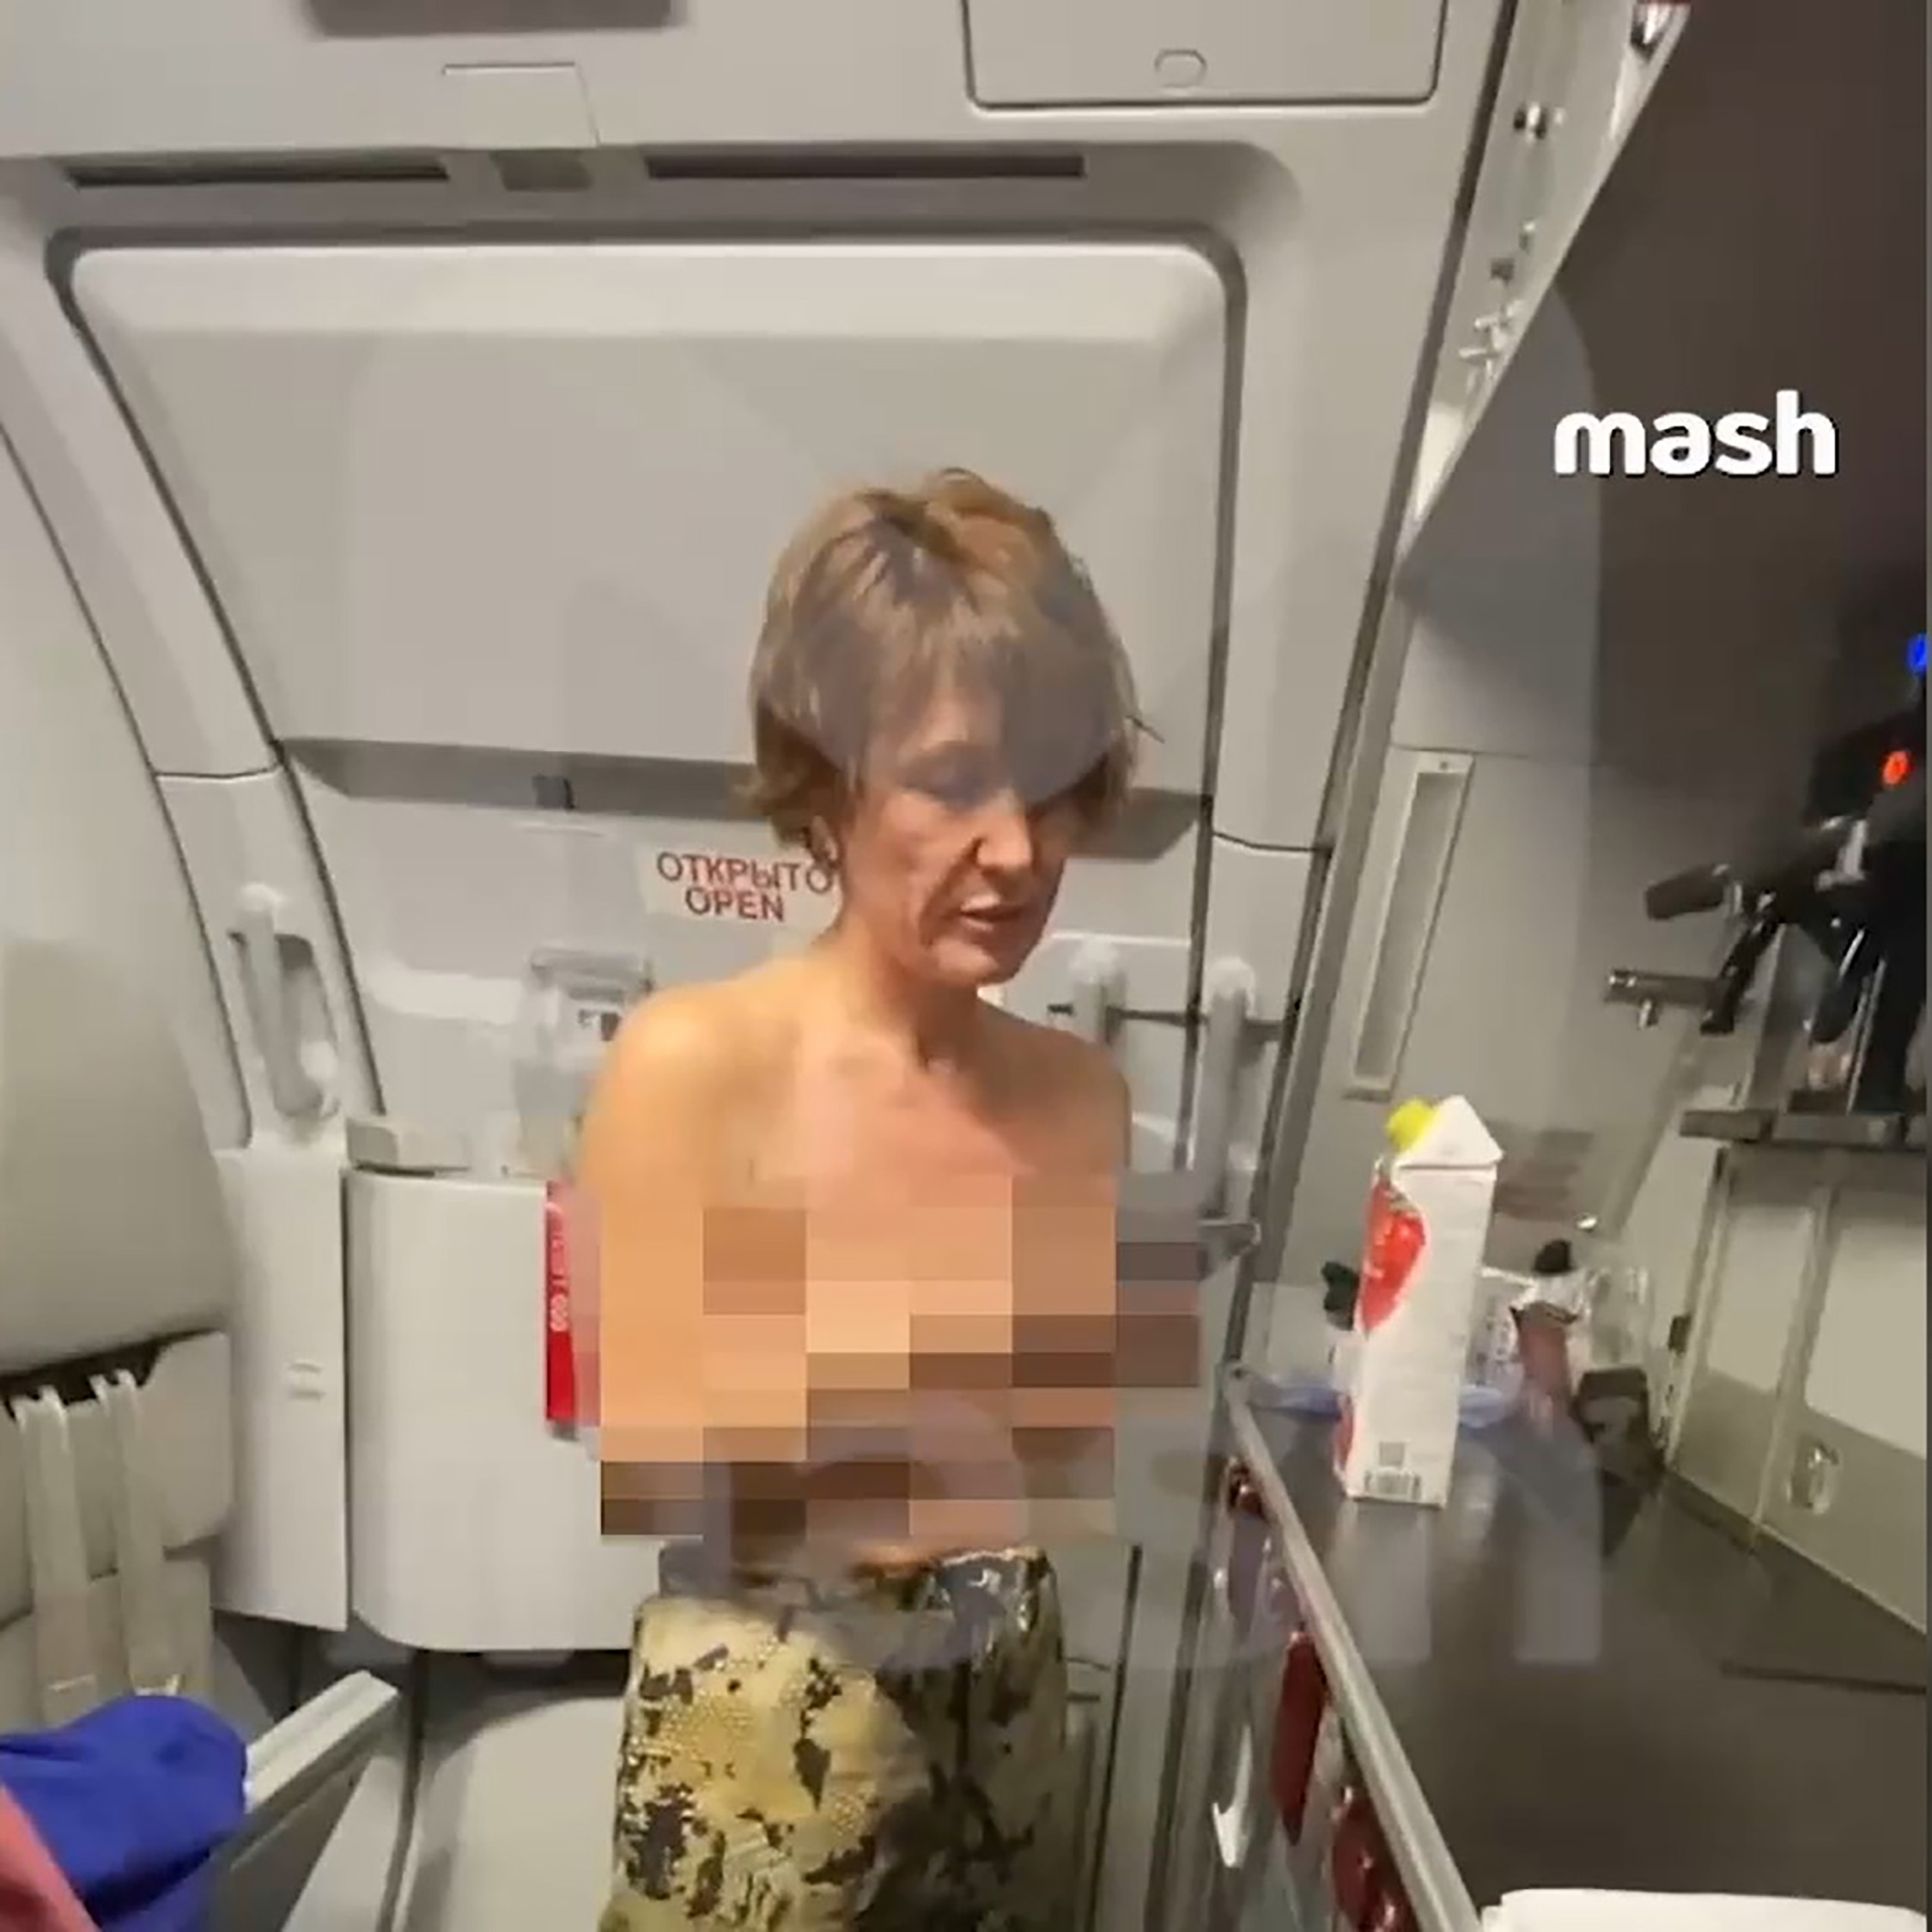 chelsea collard share naked girl from flight photos